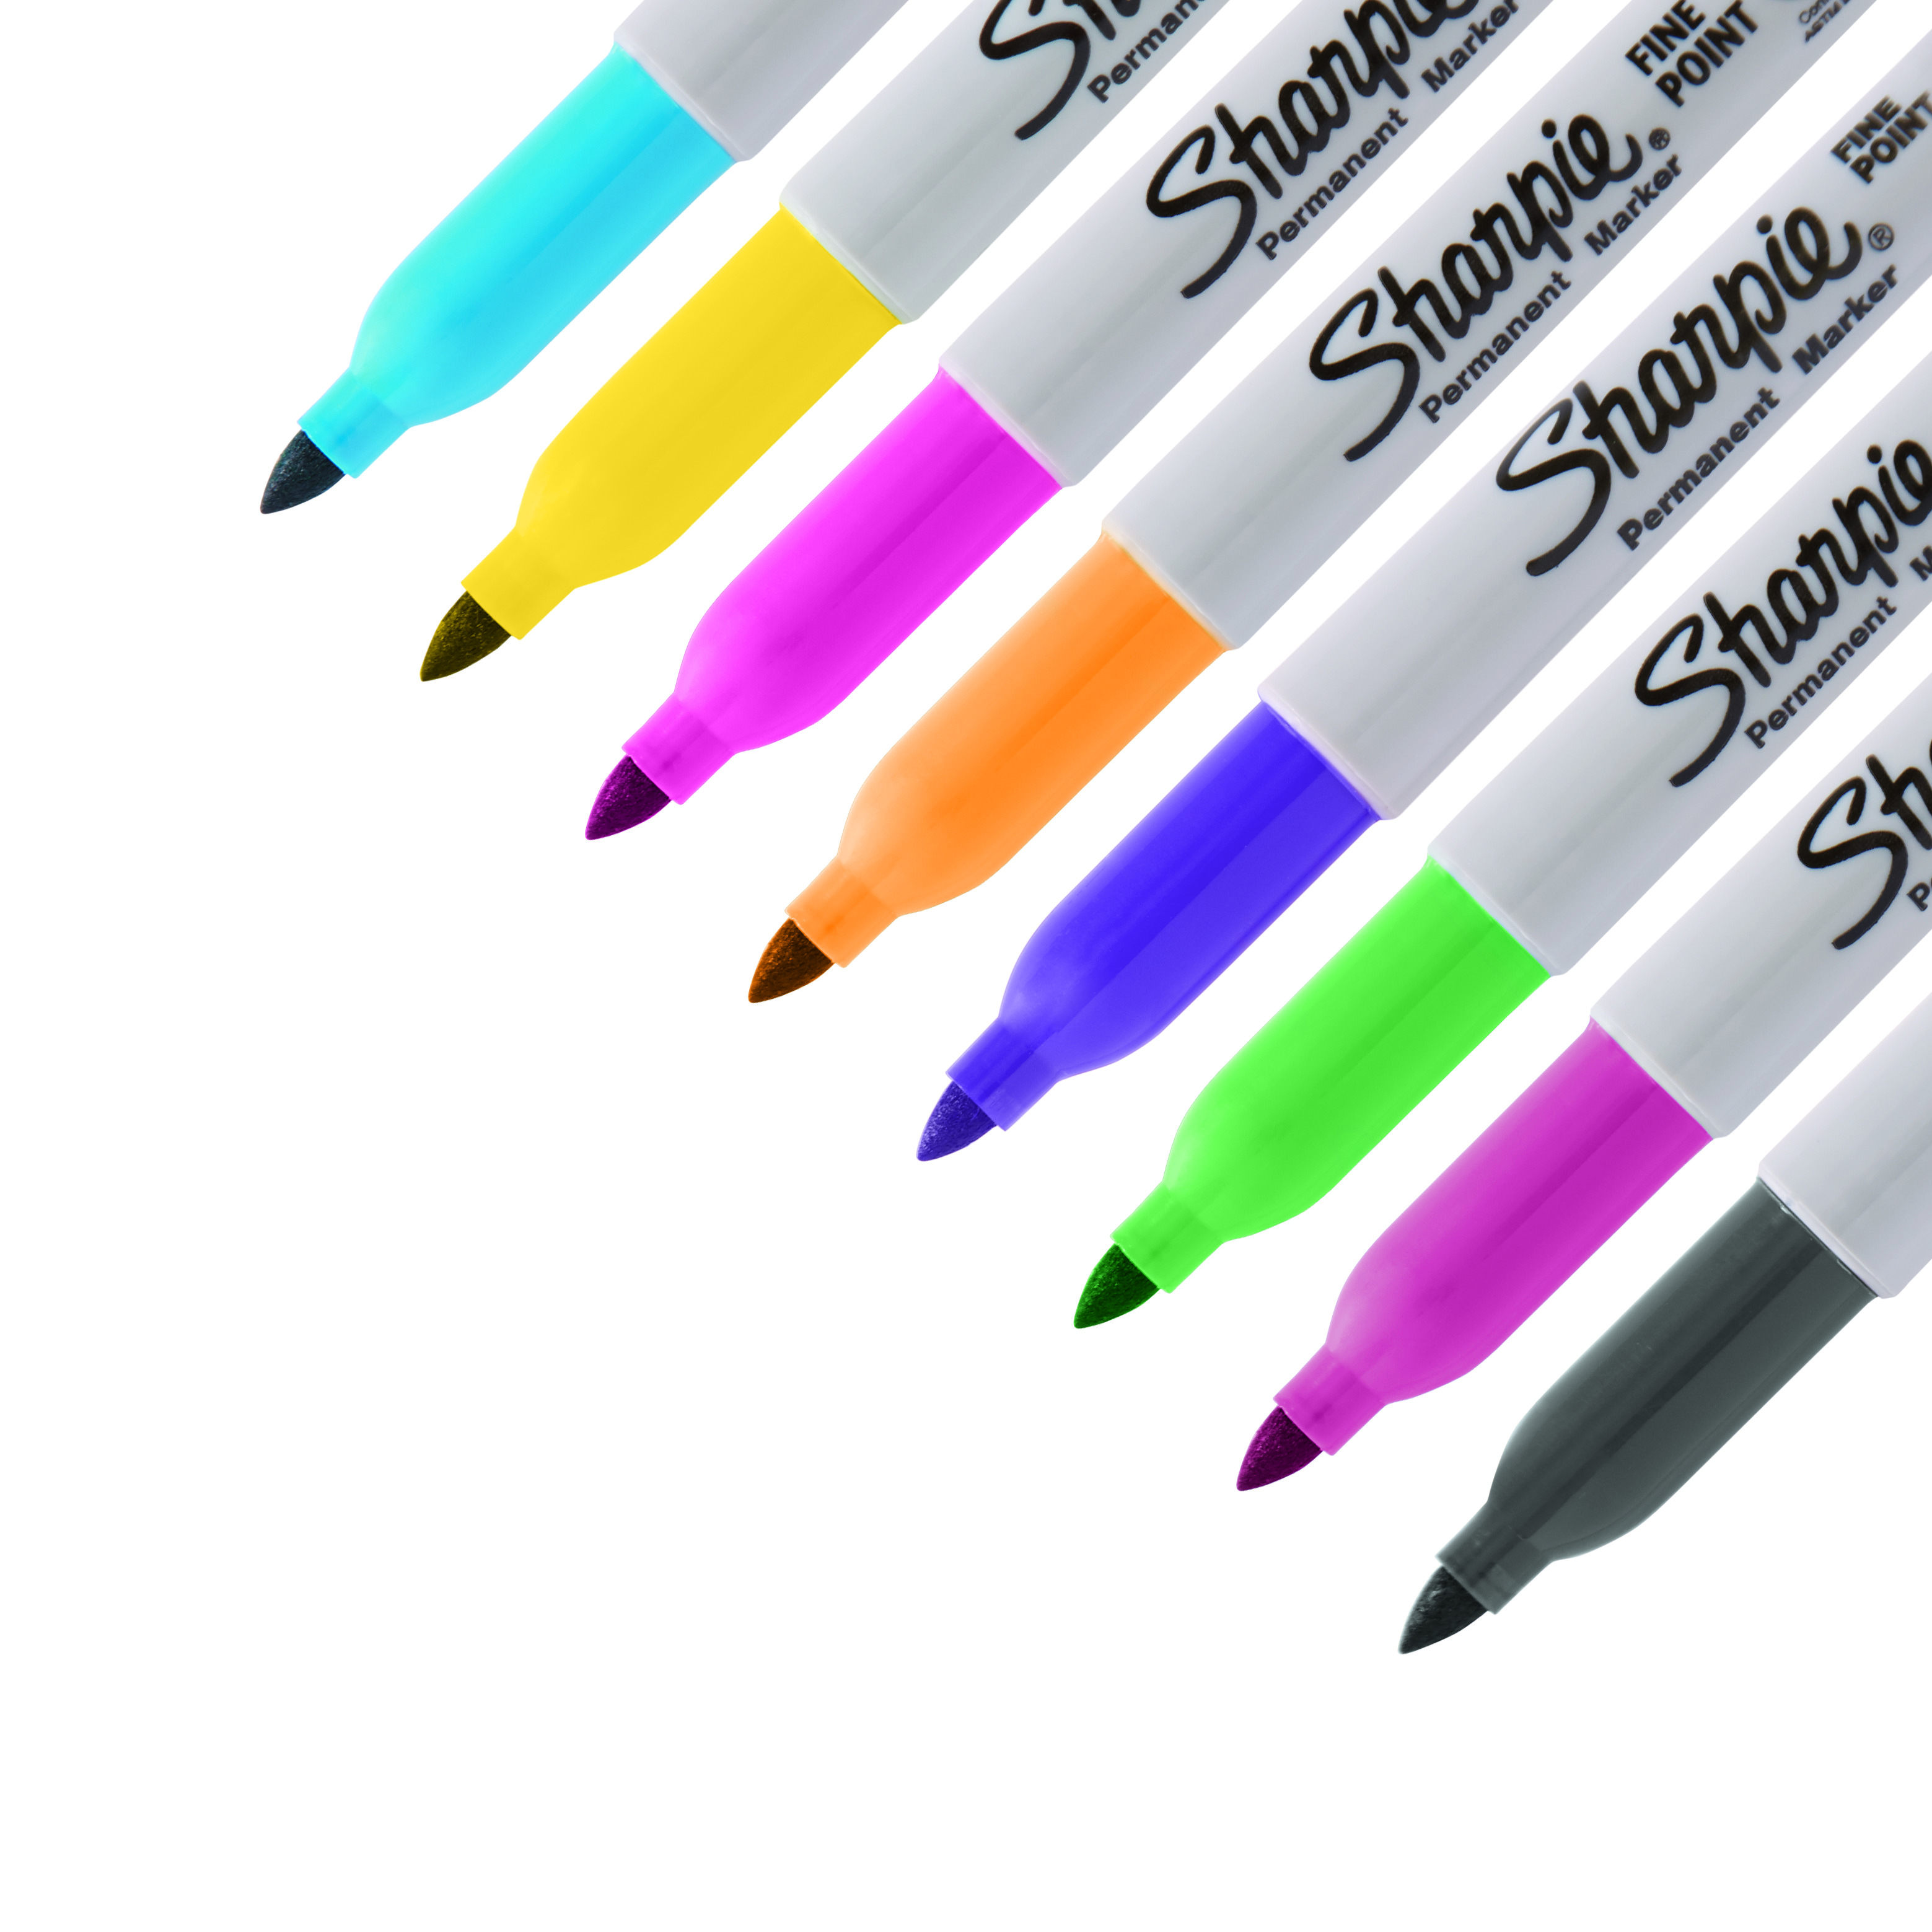 Sharpie Permanent Marker Limited Edition Set, Exclusive Color Assortment, plus 6 Bonus Coloring Sheets, 36 Count - image 8 of 9